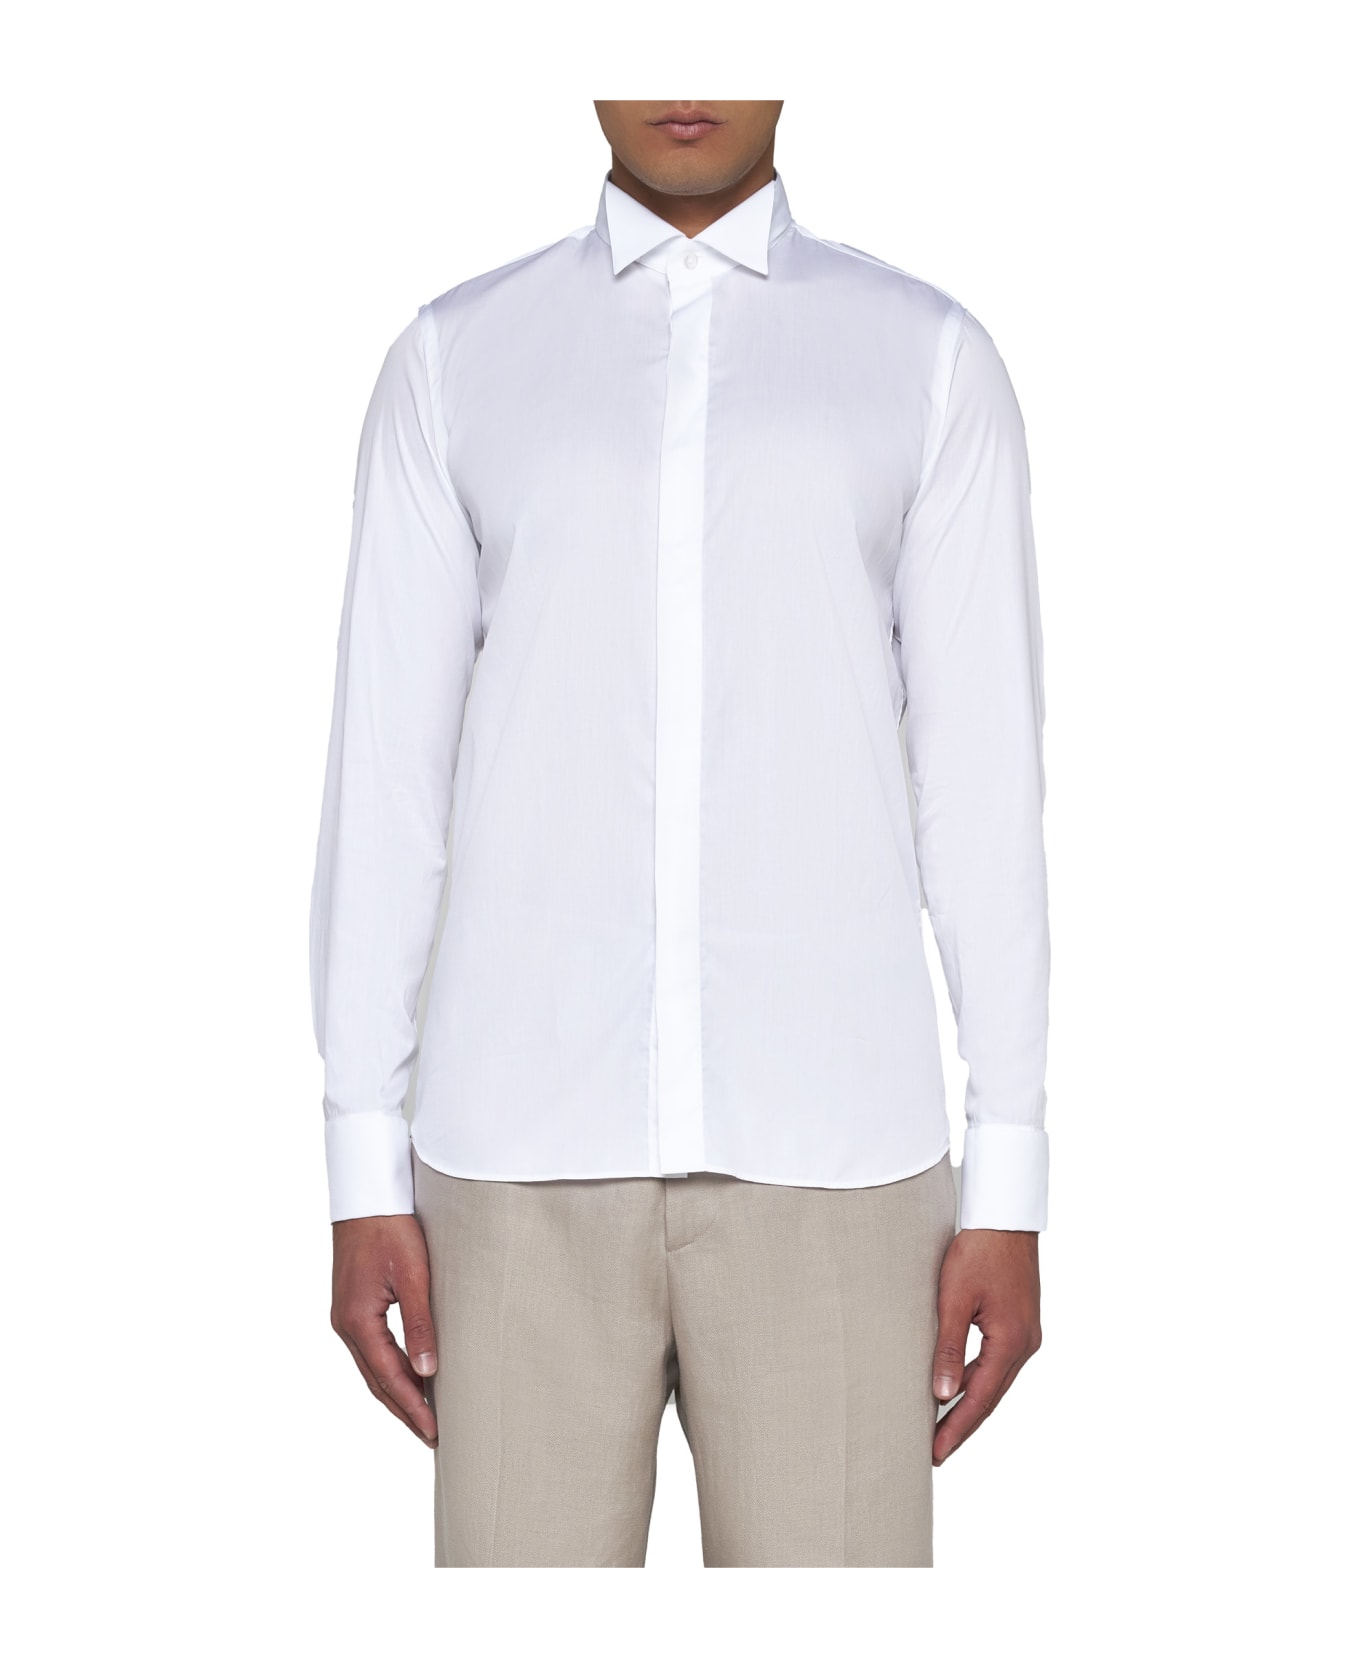 Tagliatore Shirt - White シャツ